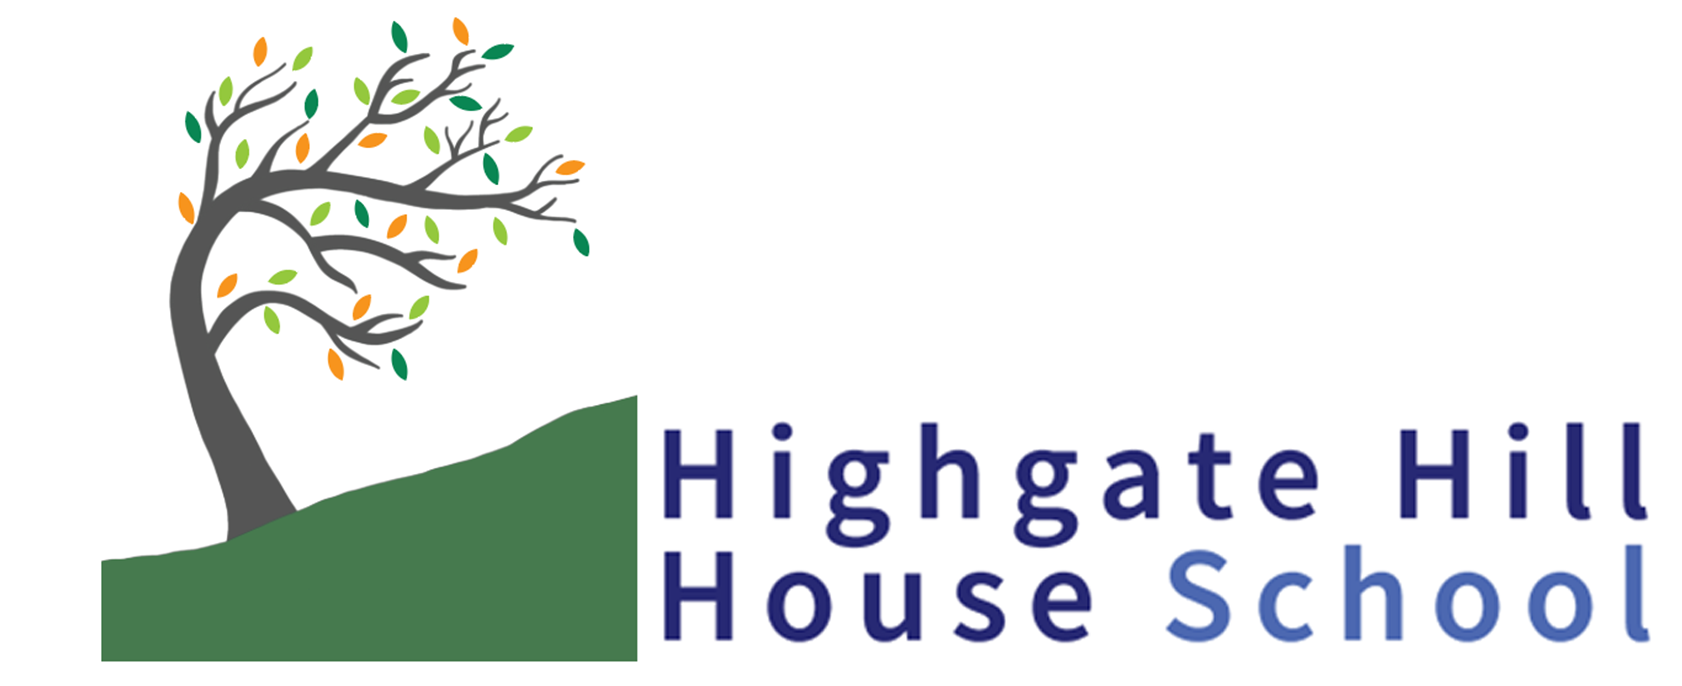 Highgate Hill House School